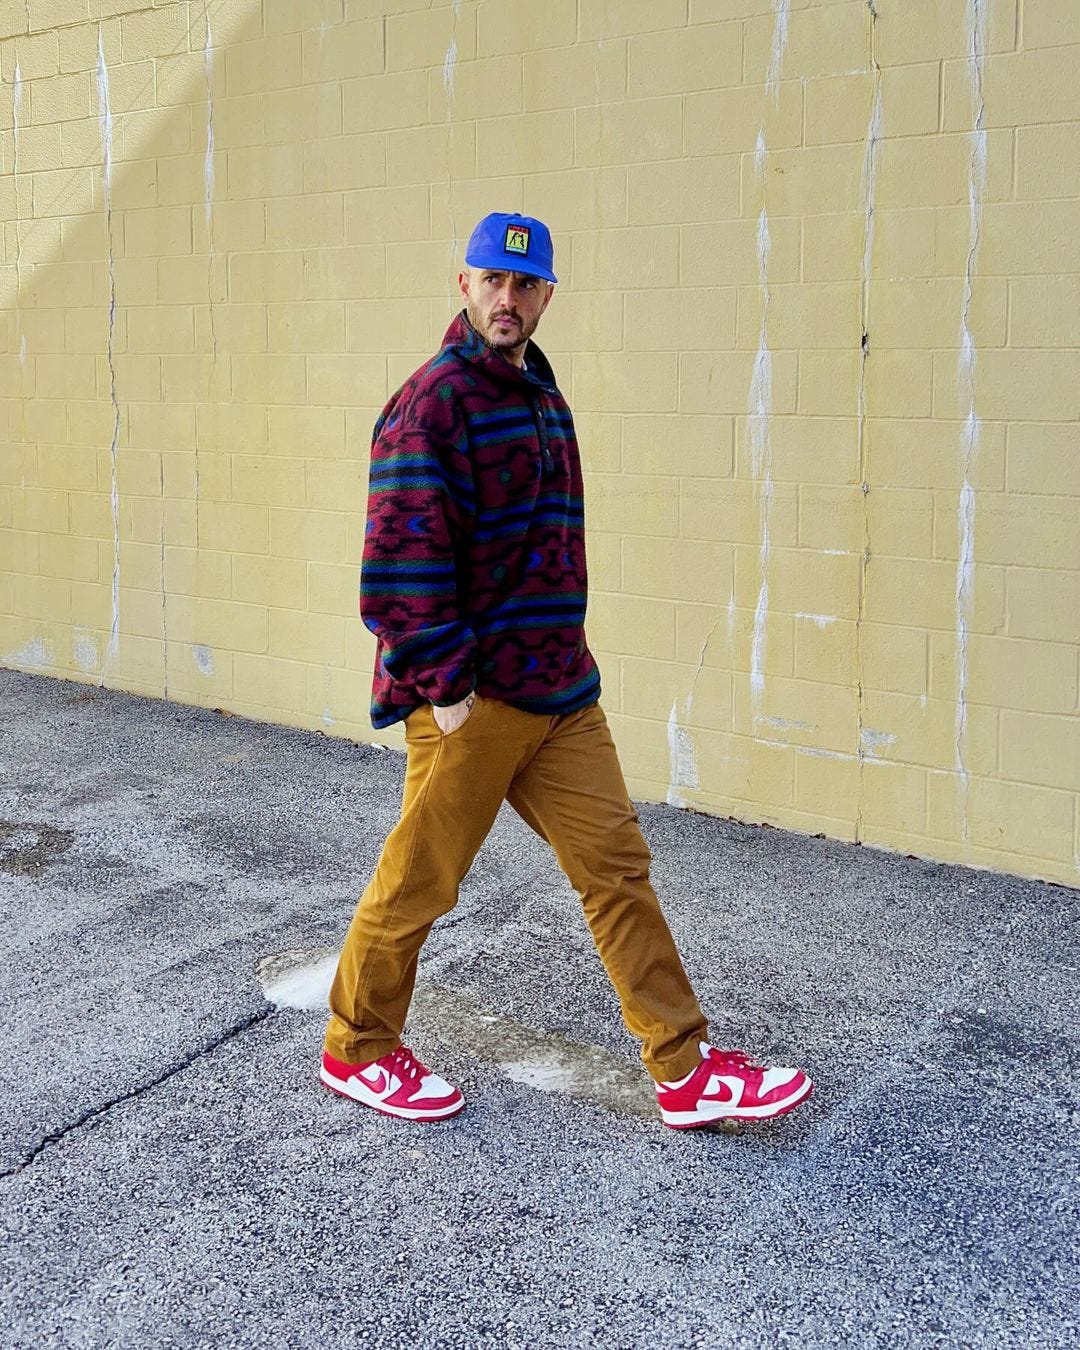 men's style instagram influencer @jesse_wines wearing red Nike sneakers